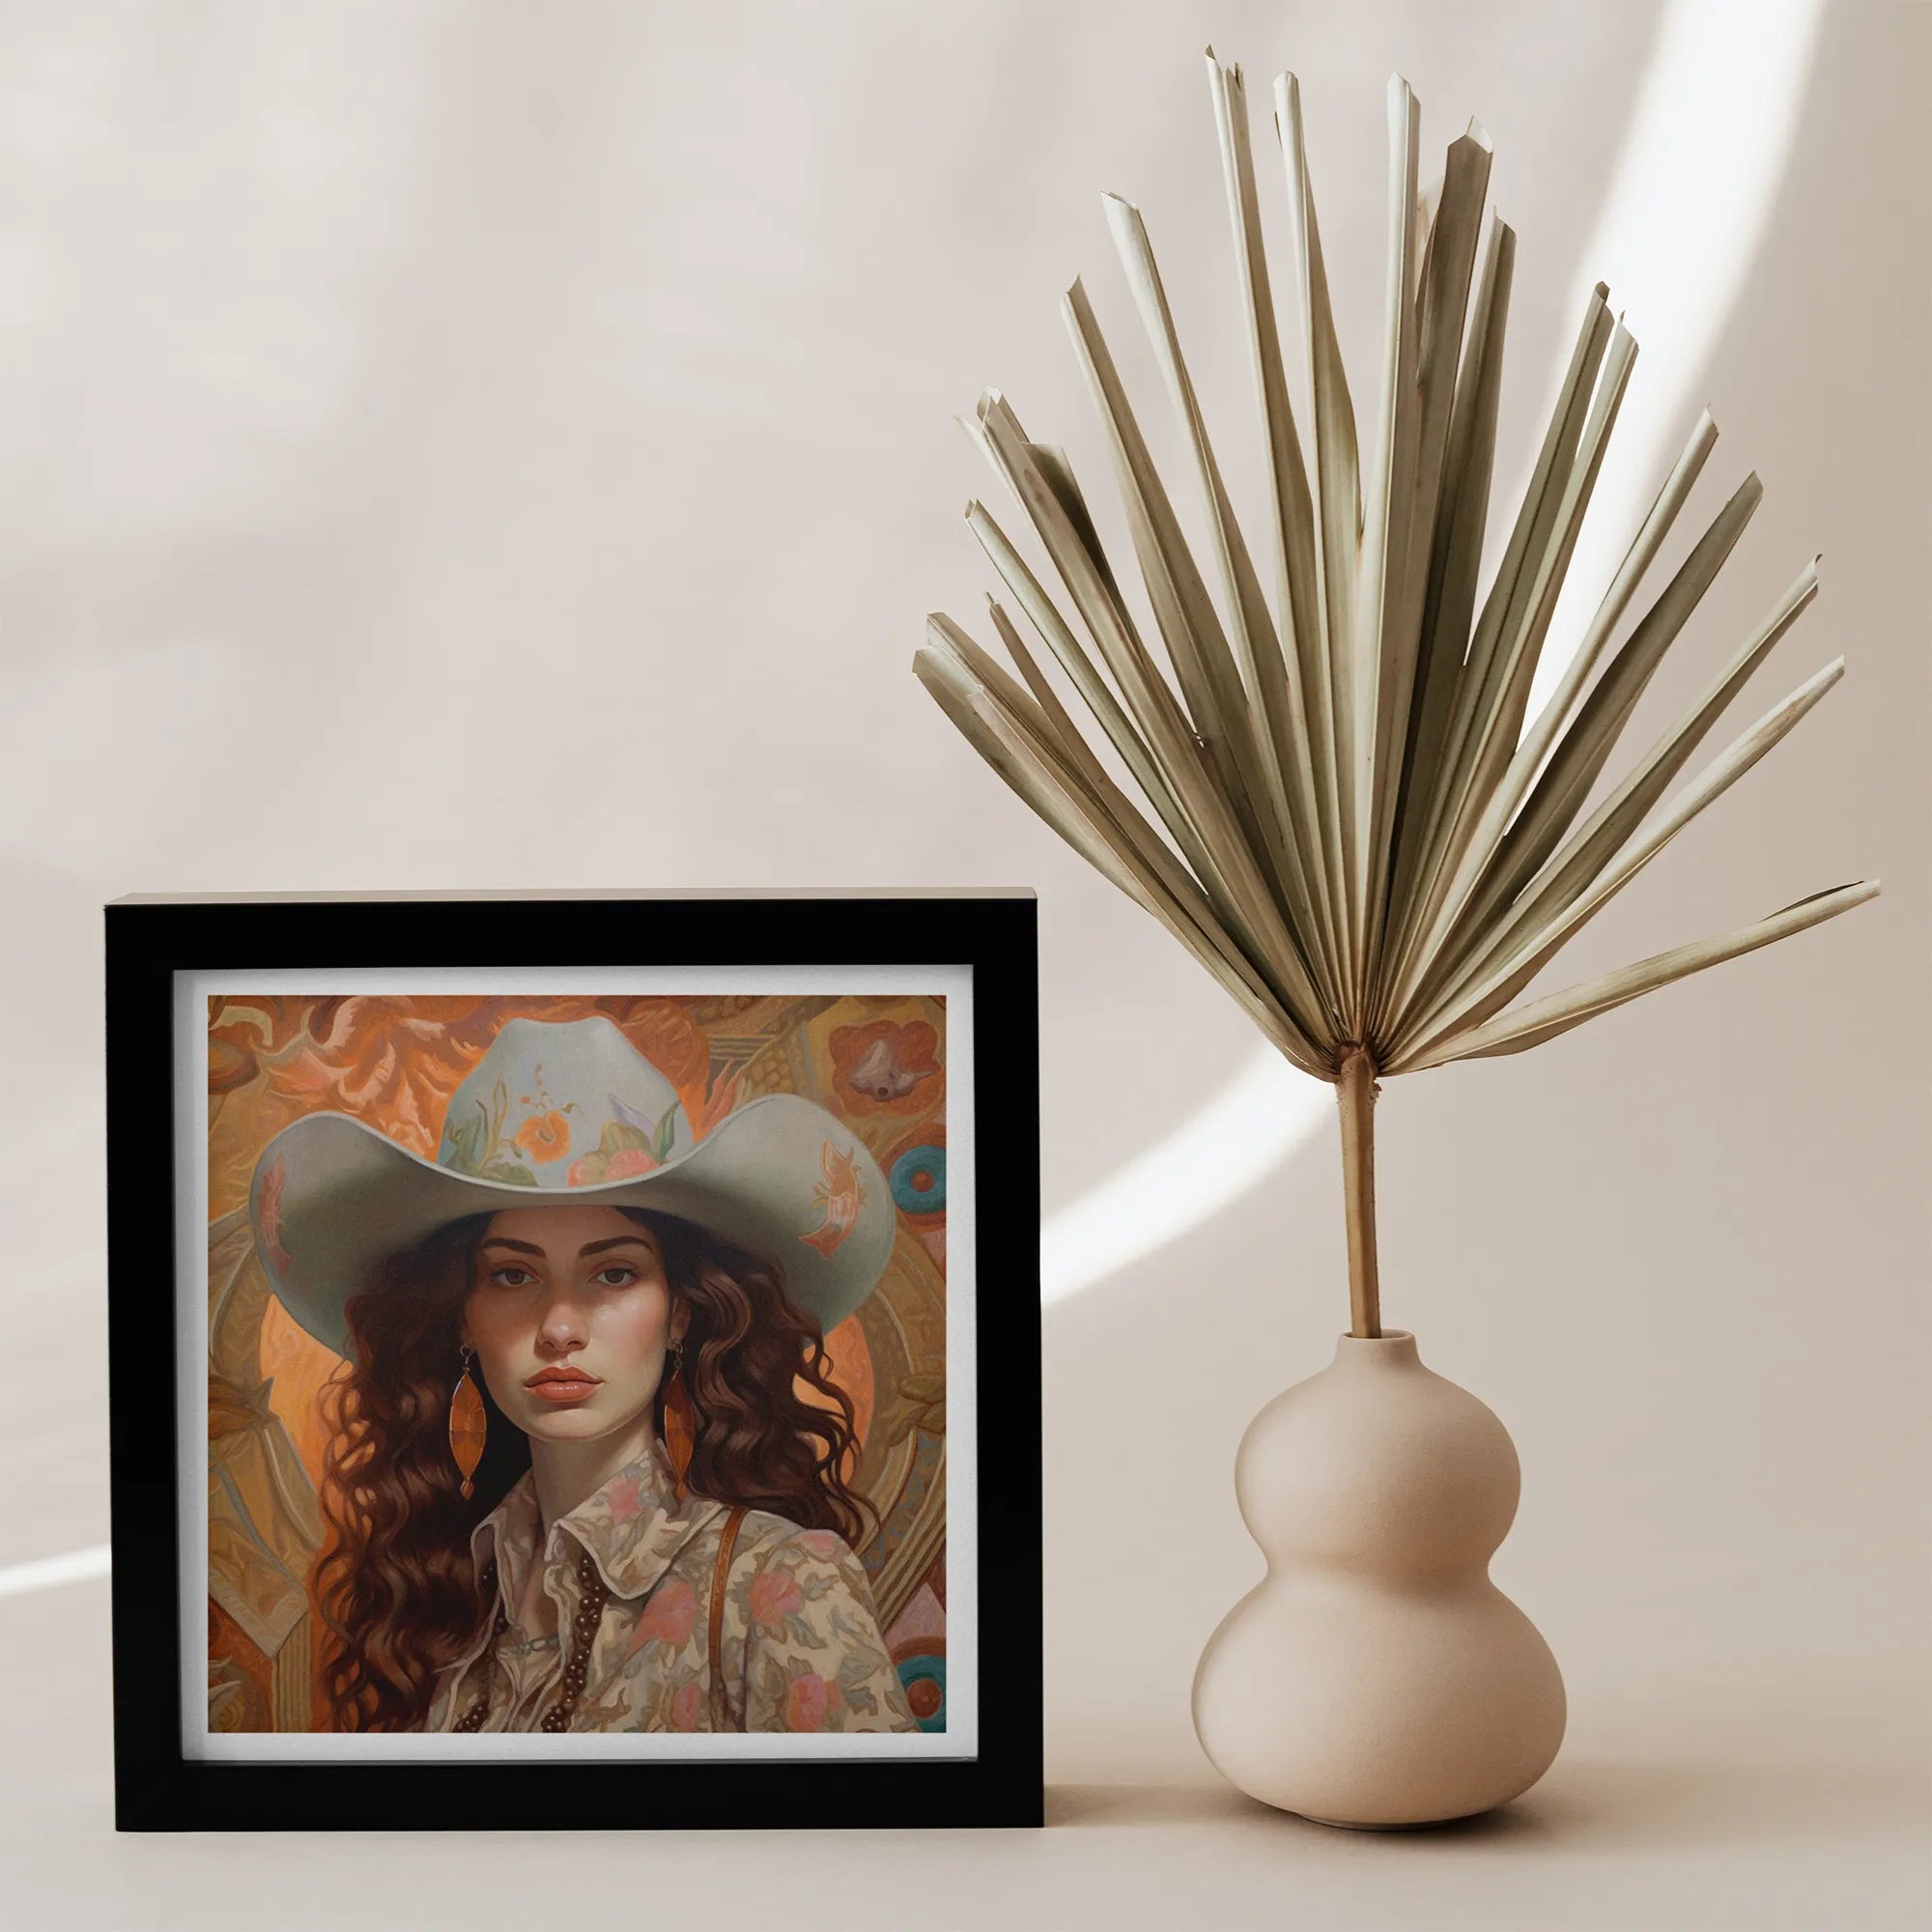 Nina - Lesbian Cowgirl Art Print - Wlw Jewish Sapphic Femme - 12’x12’ - Posters Prints & Visual Artwork - Aesthetic Art